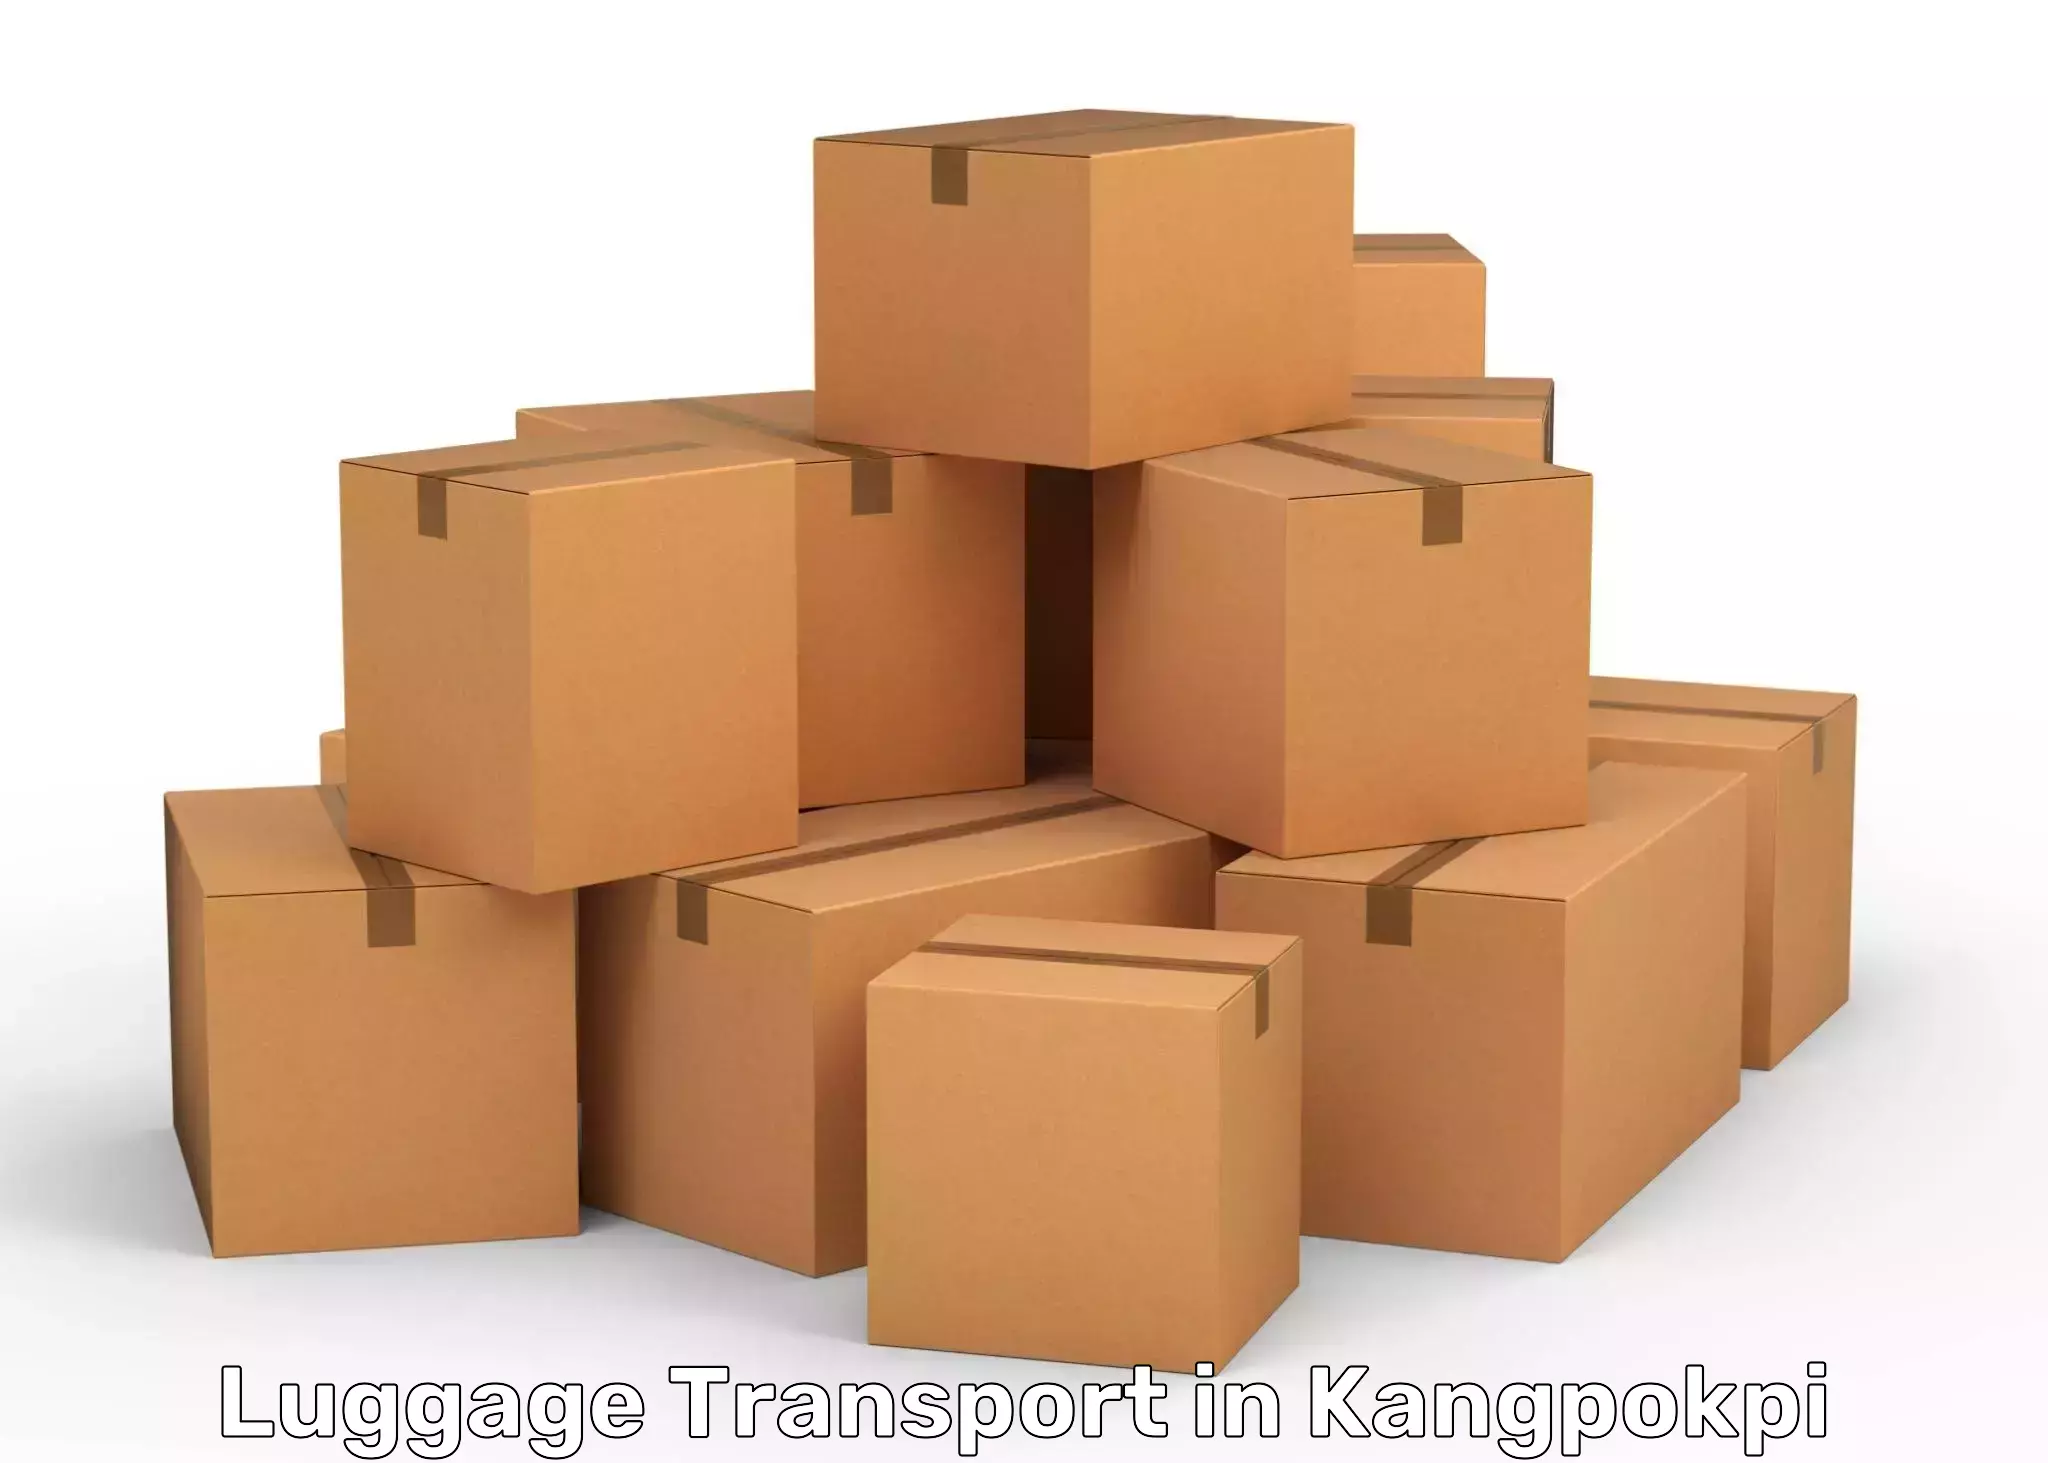 Baggage transport coordination in Kangpokpi